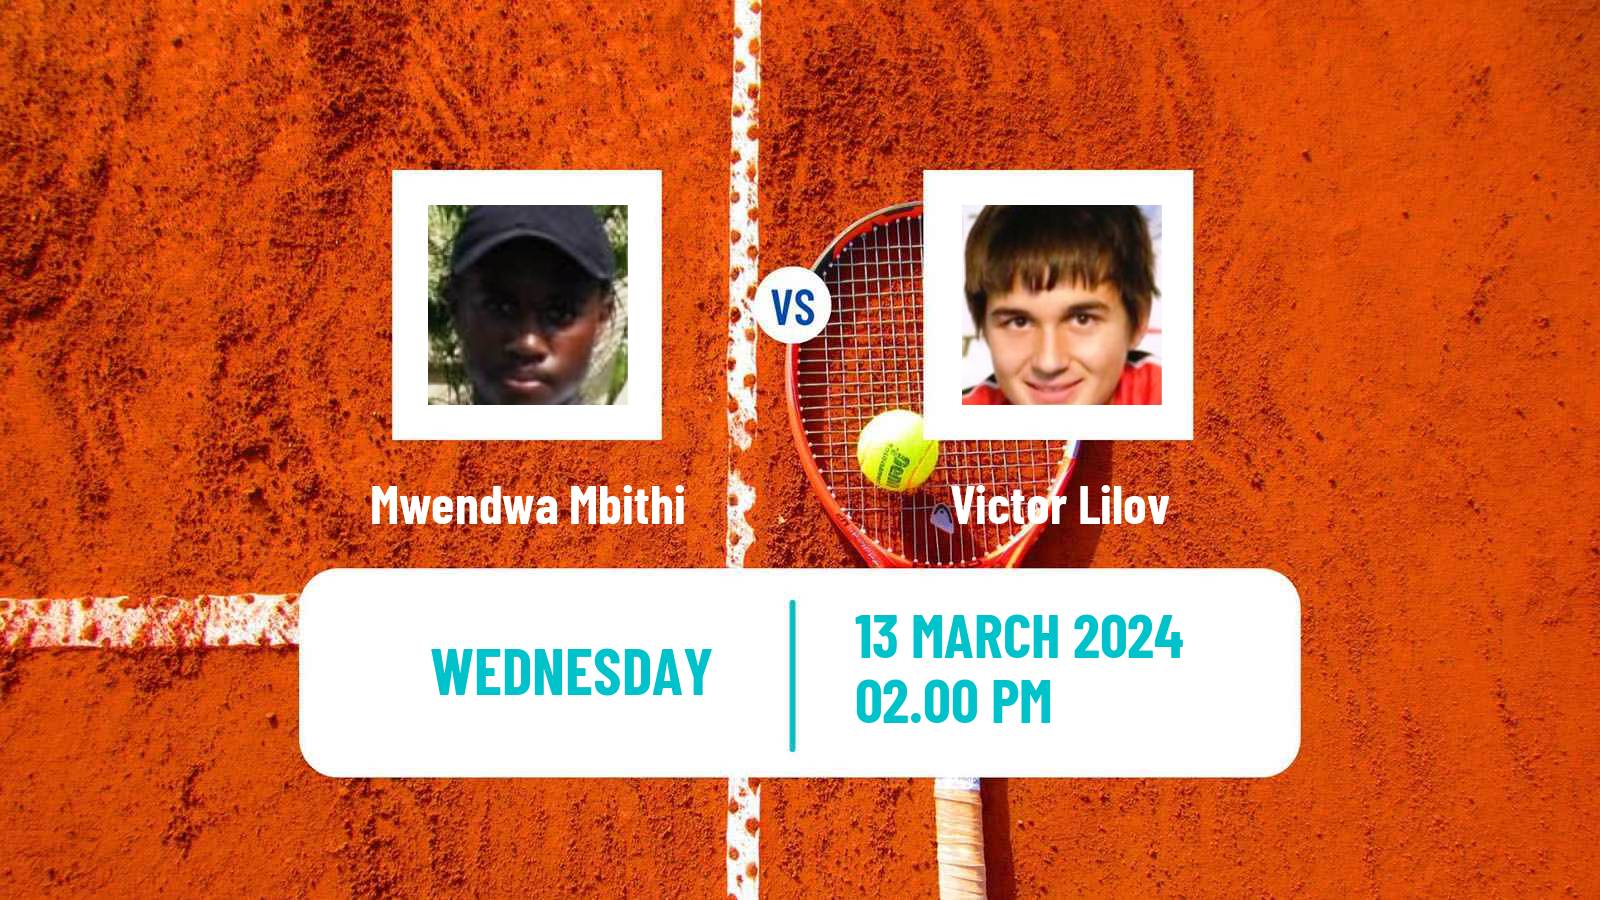 Tennis ITF M25 Santo Domingo 2 Men Mwendwa Mbithi - Victor Lilov